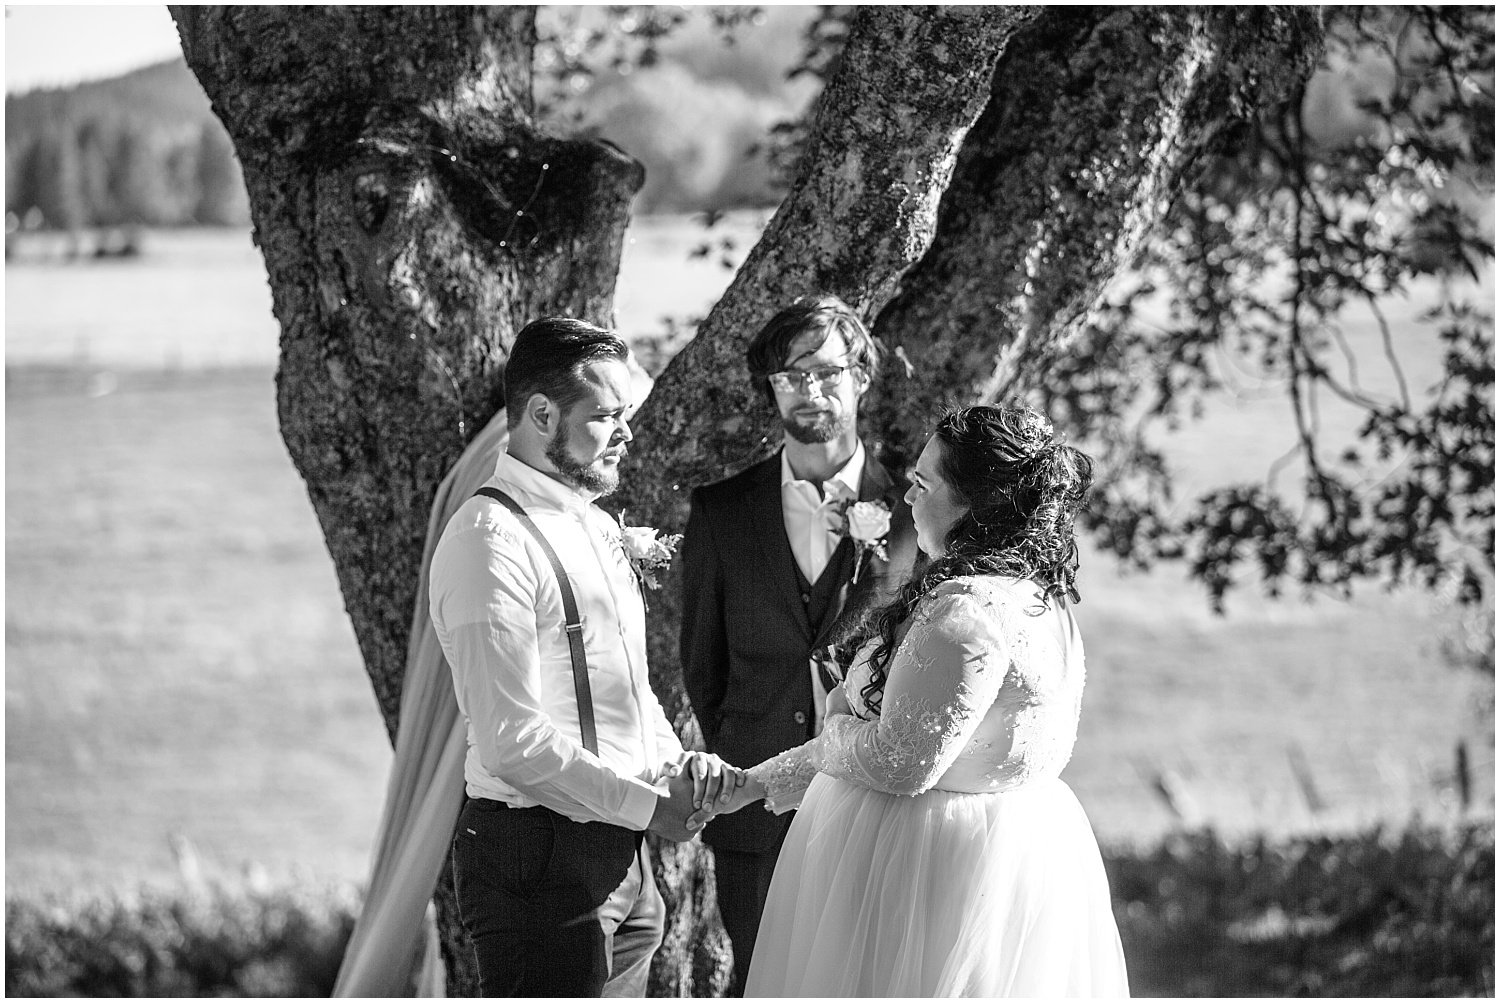 Intimate mountain cabin wedding ceremony | Colorado Springs wedding photographer